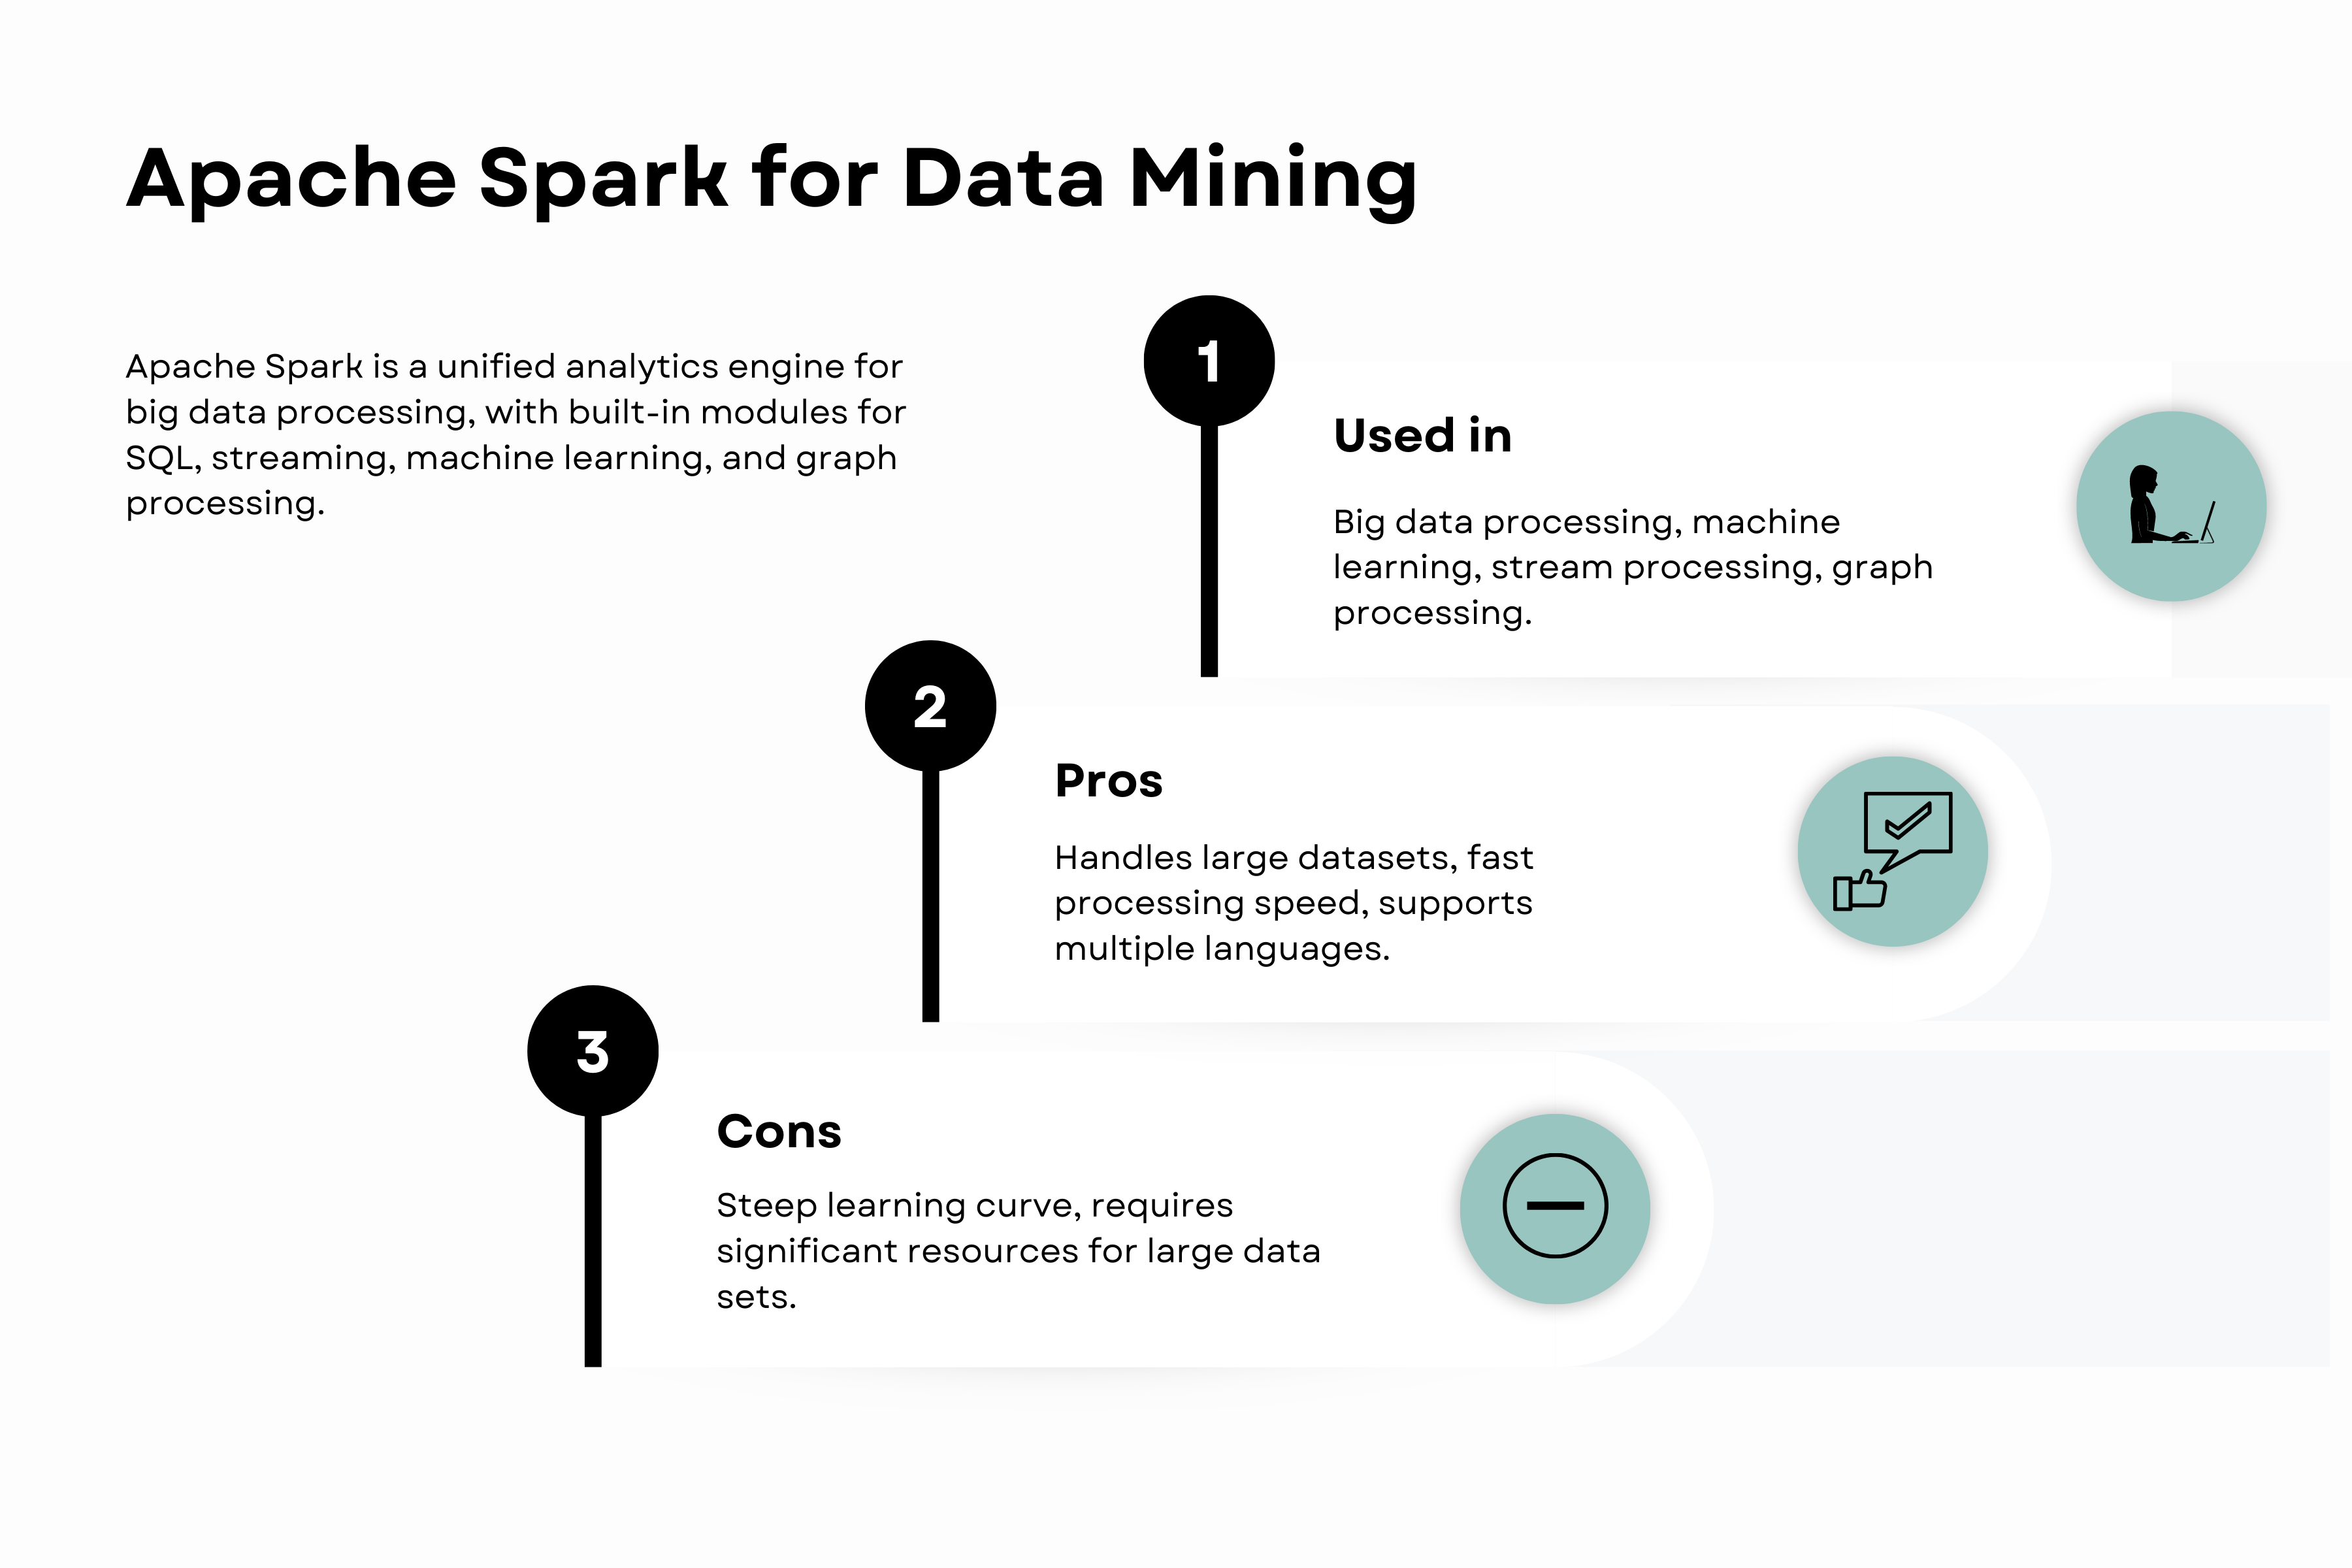 Apache Spark for data mining